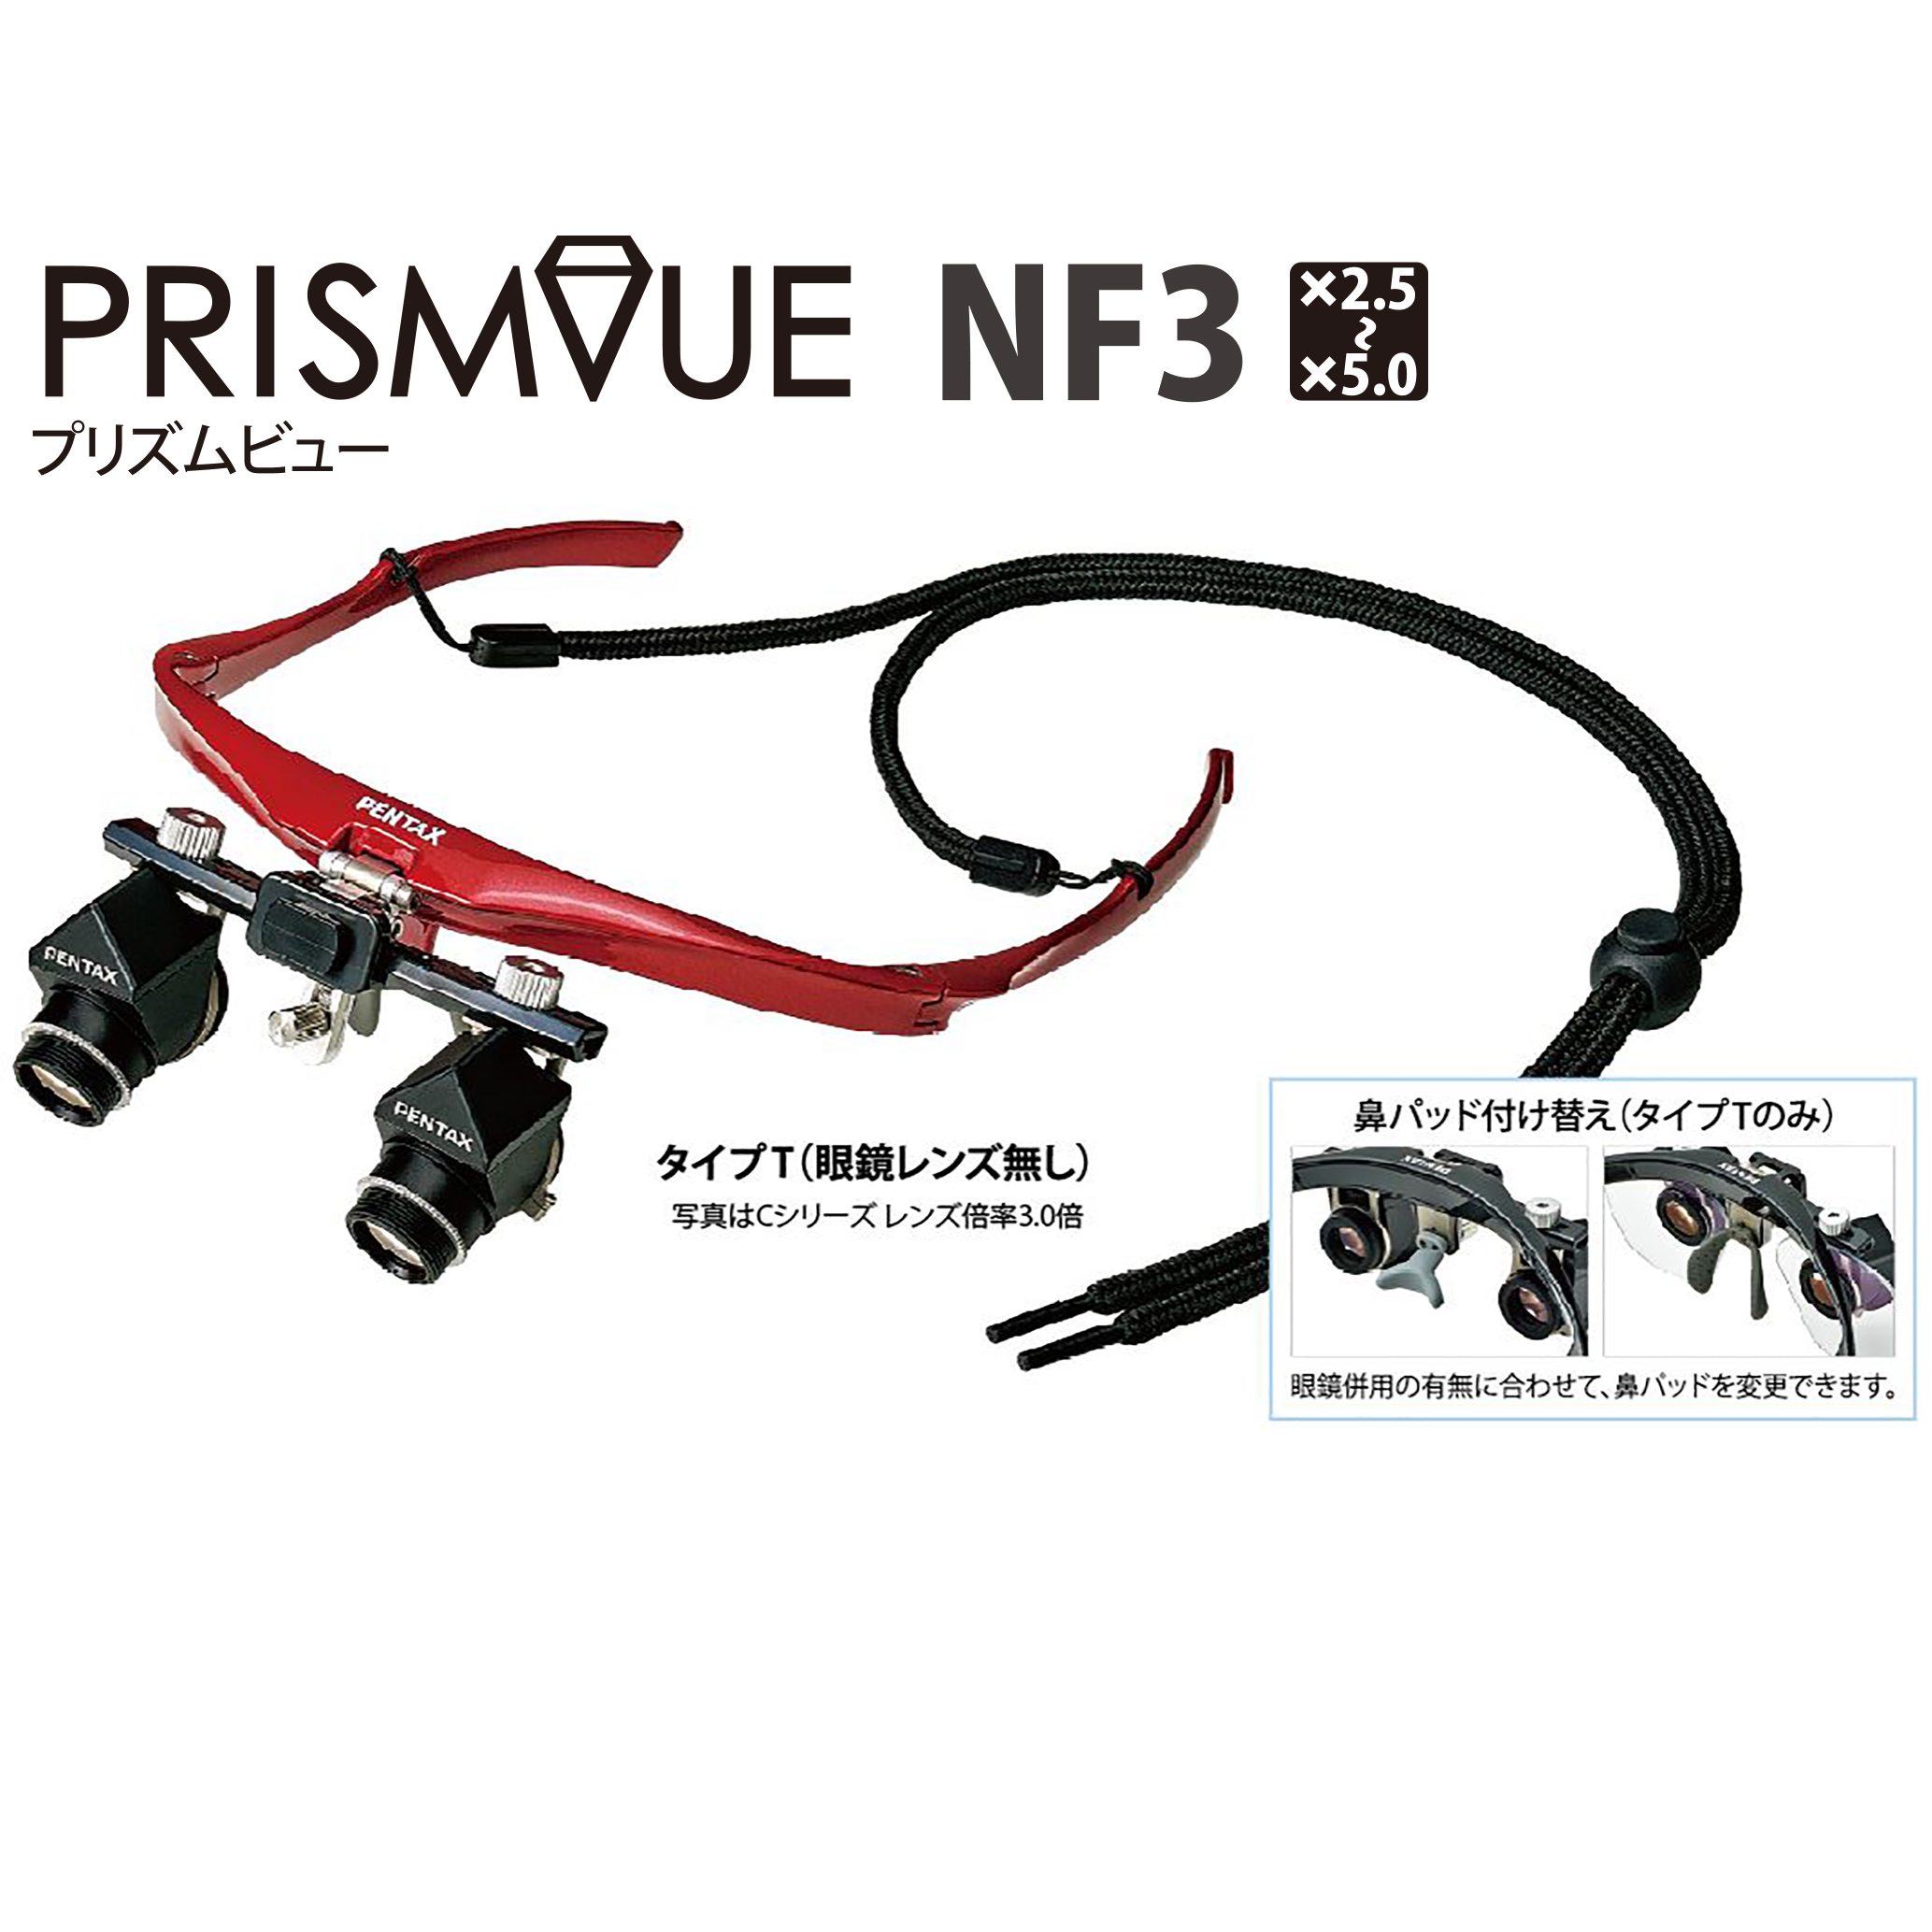 PENTAX PRISMVUE NF3 Sシリーズ TYPE T 手術用ルーペ